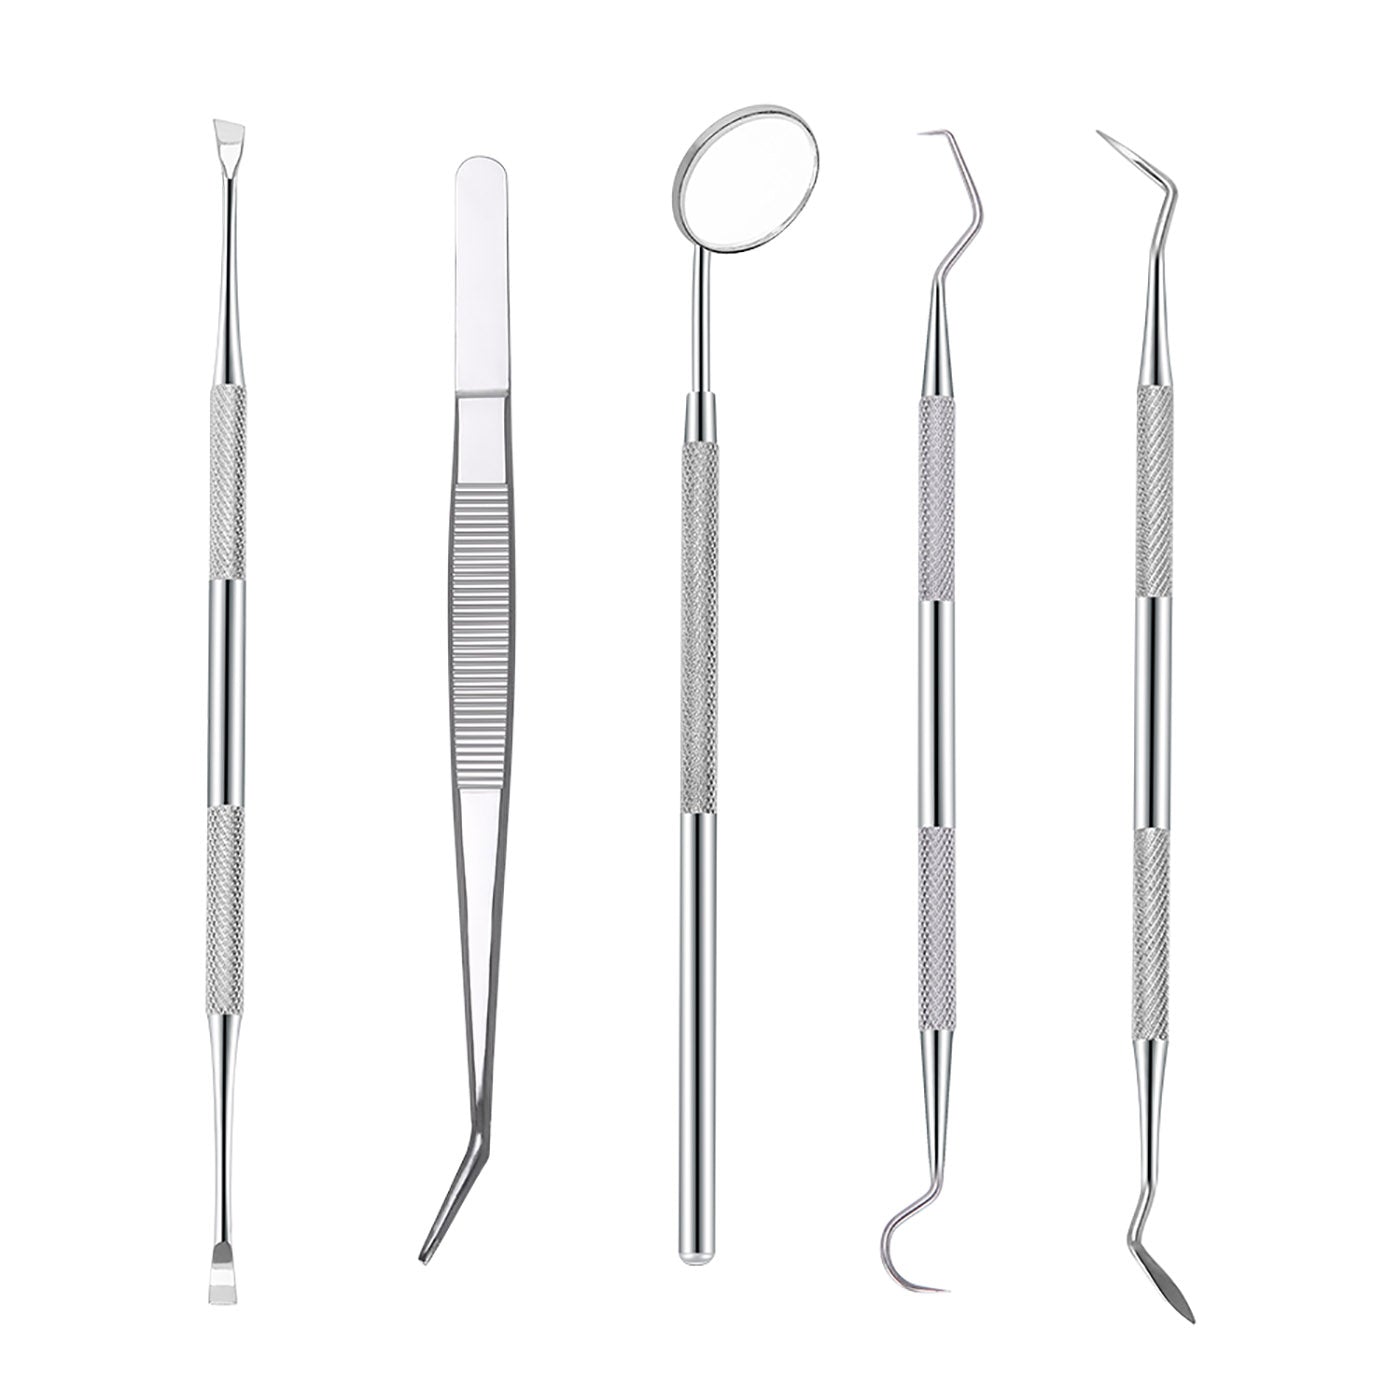 Dental Tools Teeth Cleaning Kit, 5pcs/Set. - AZDENT